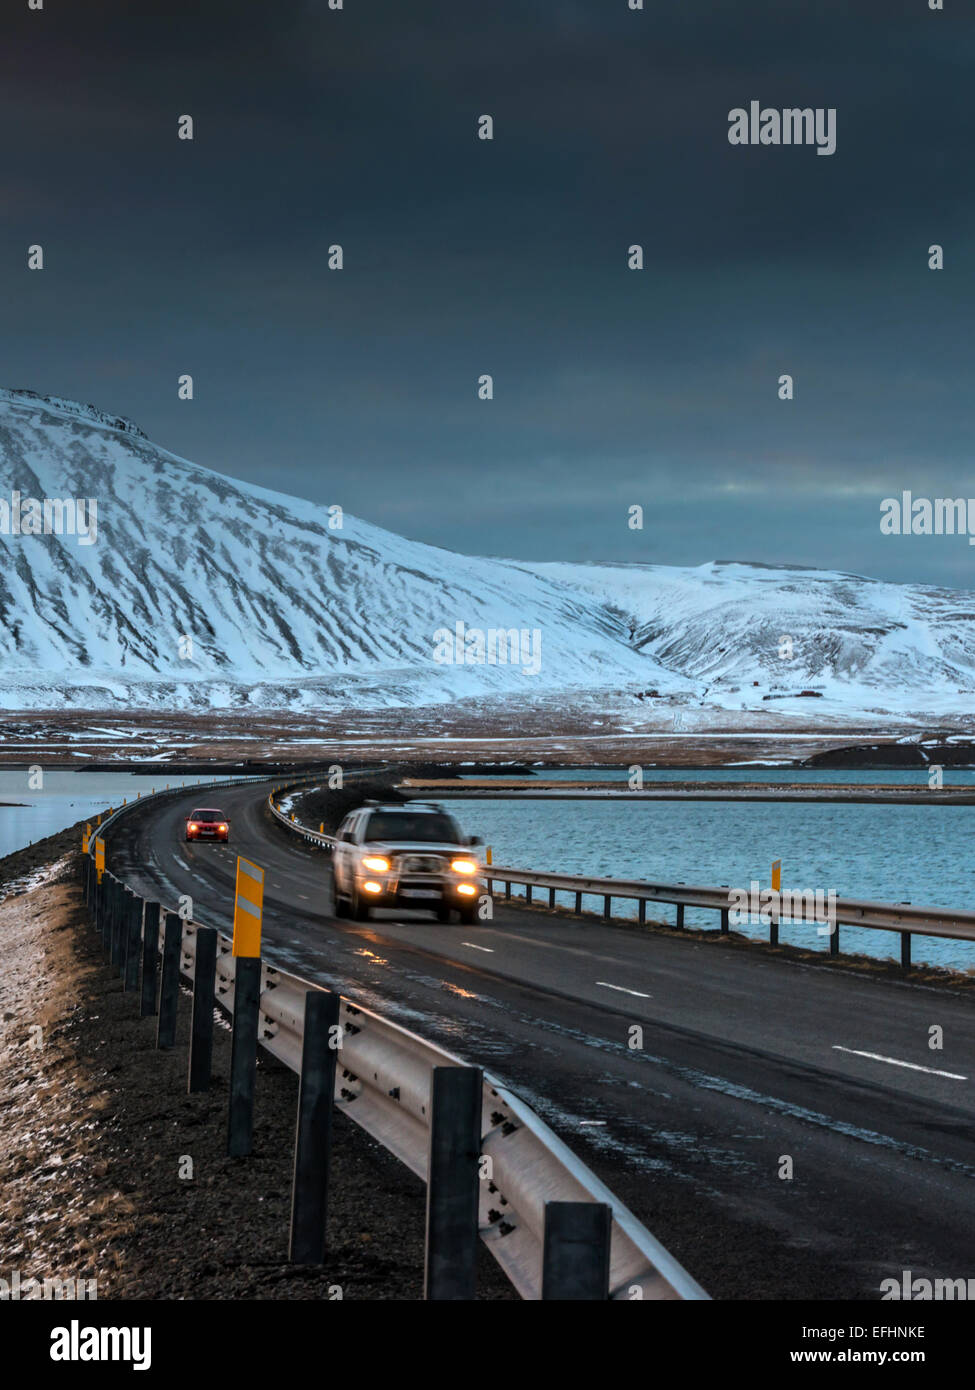 Two vehicles cross the Icelandic causeway at Kolgrafafjorour, with headlights illuminated. Stock Photo